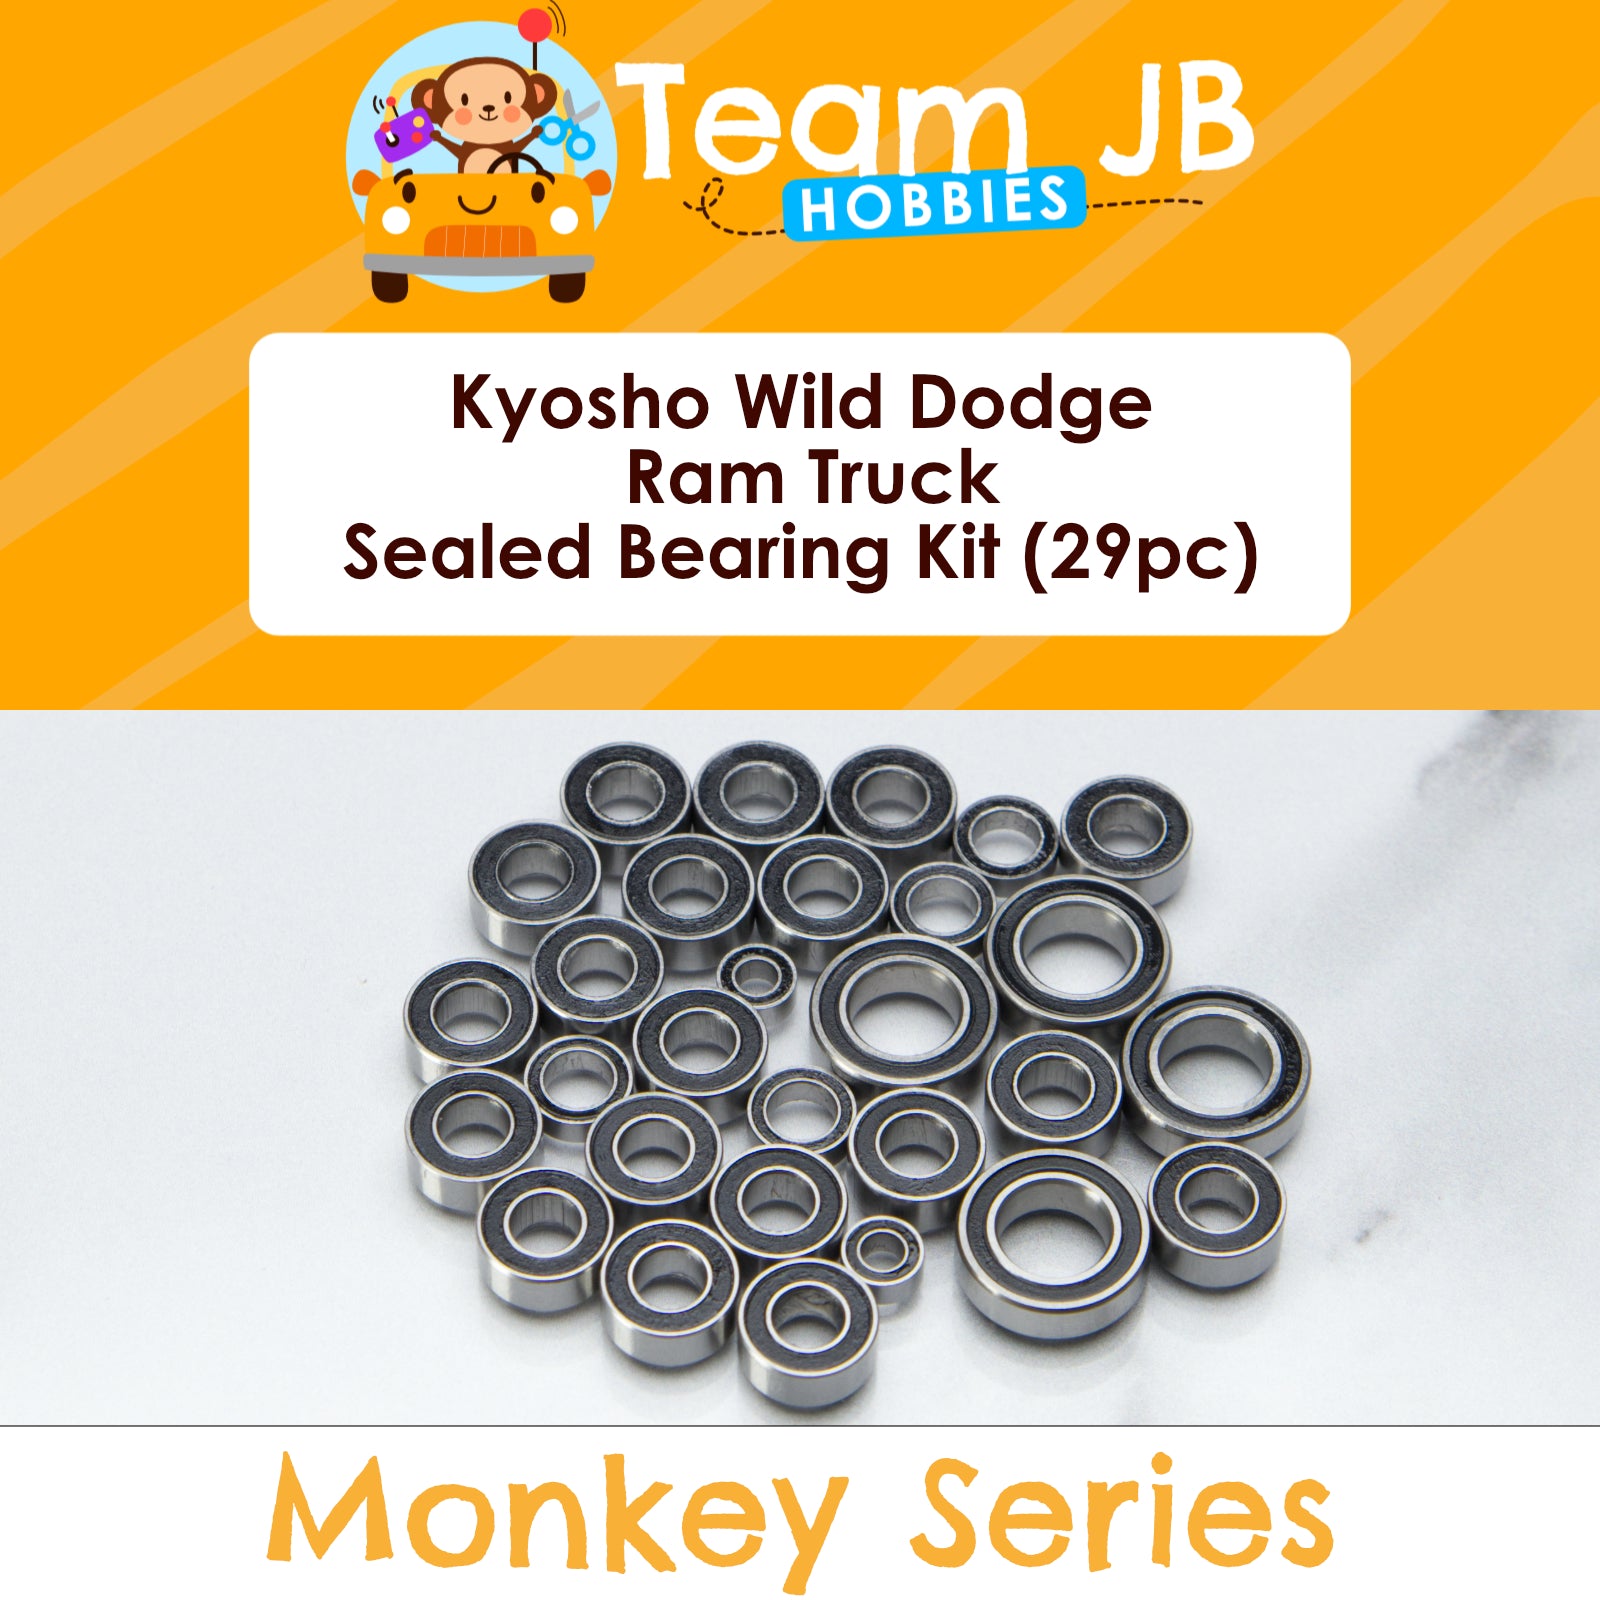 Kyosho Wild Dodge Ram Truck - Sealed Bearing Kit